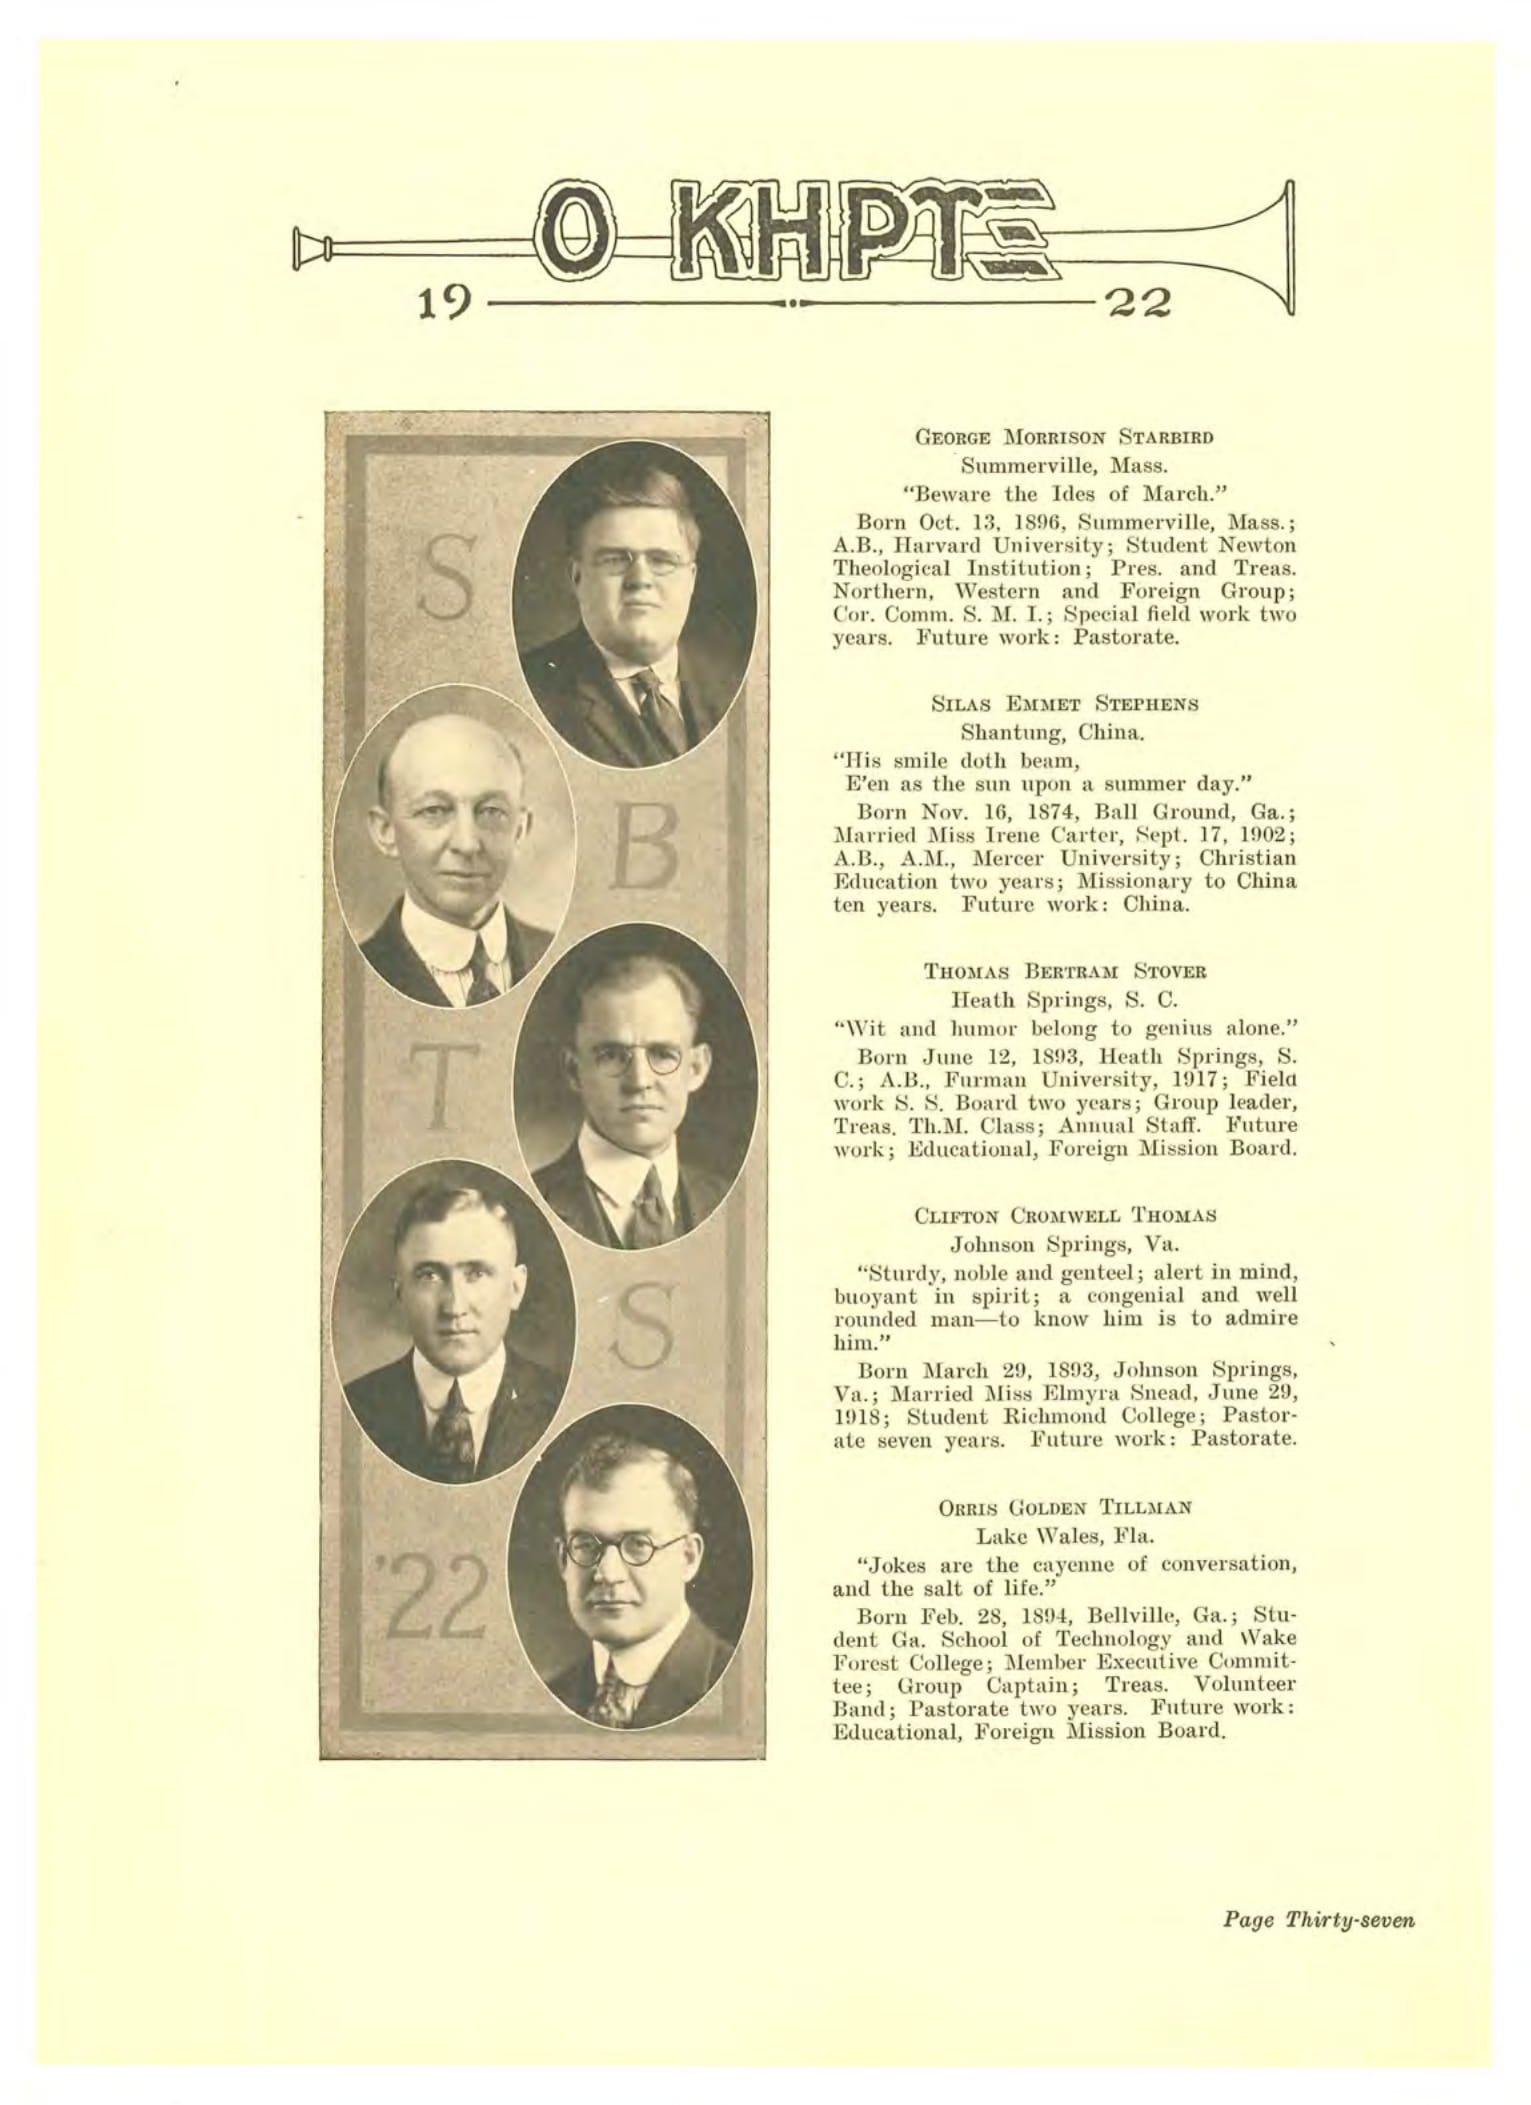 Southern Seminary annual (O Kerux) 1922-043.jpg